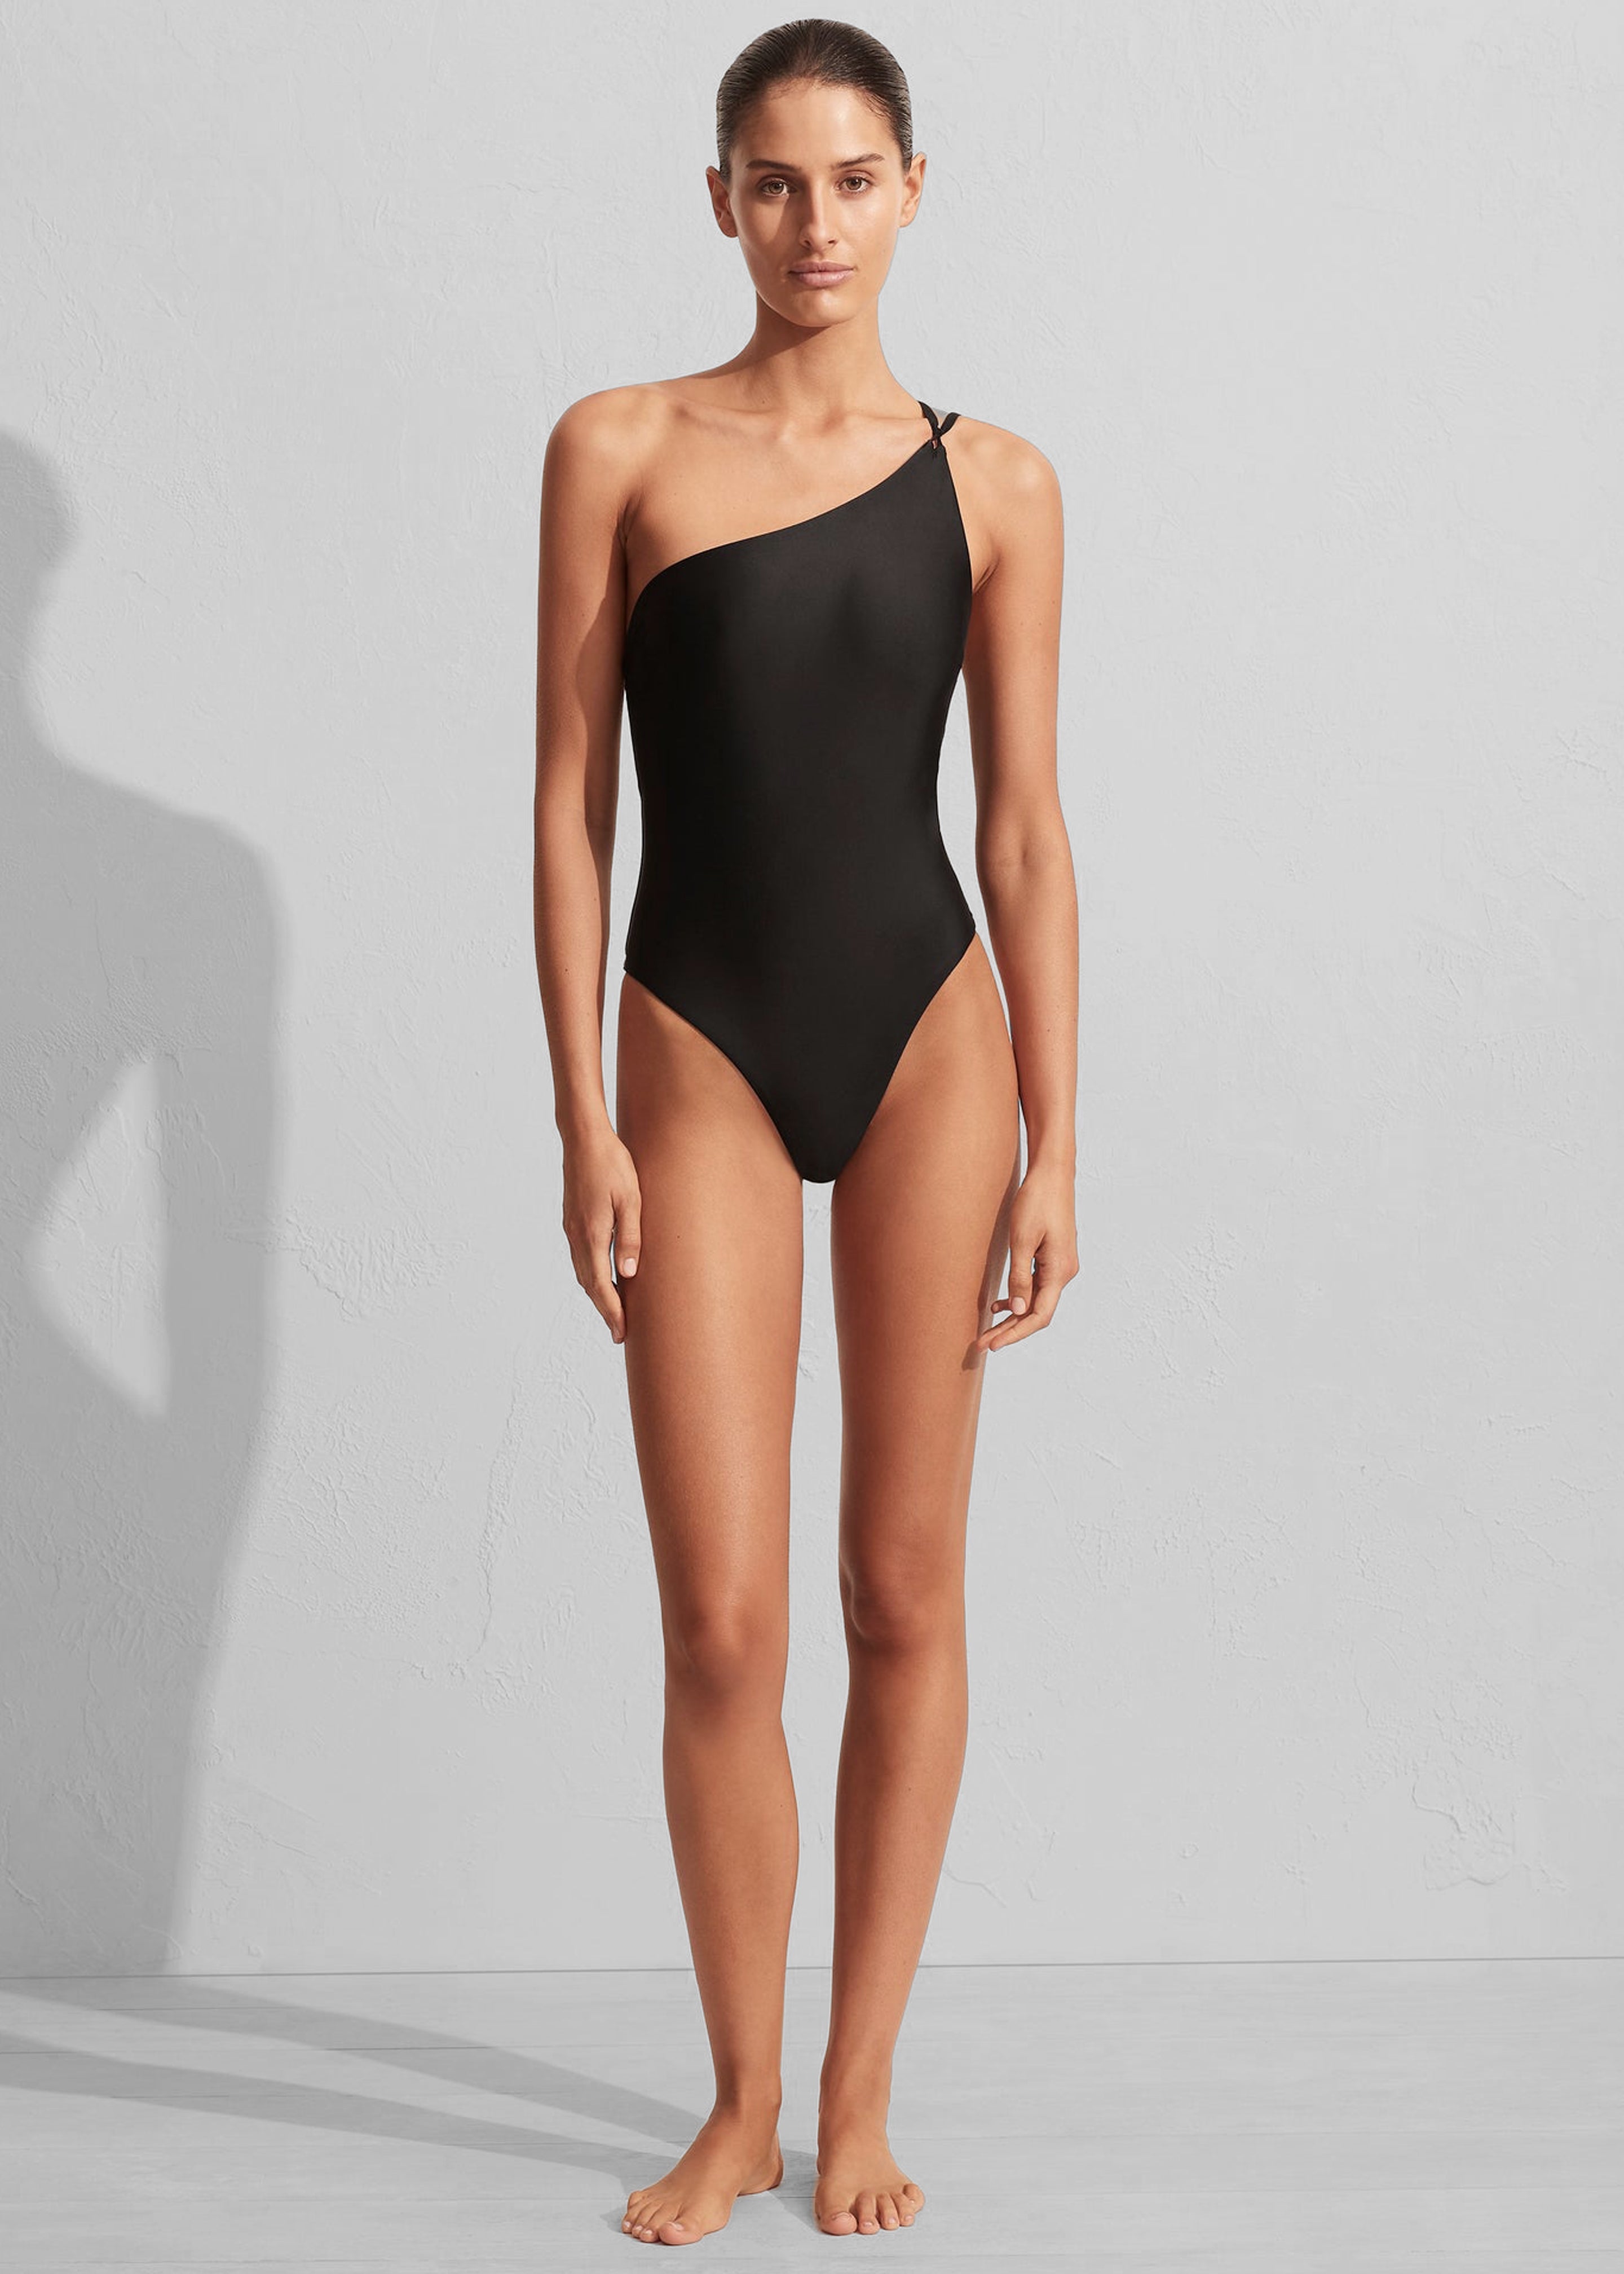 Matteau One Shoulder Maillot Swimsuit - Black - 3